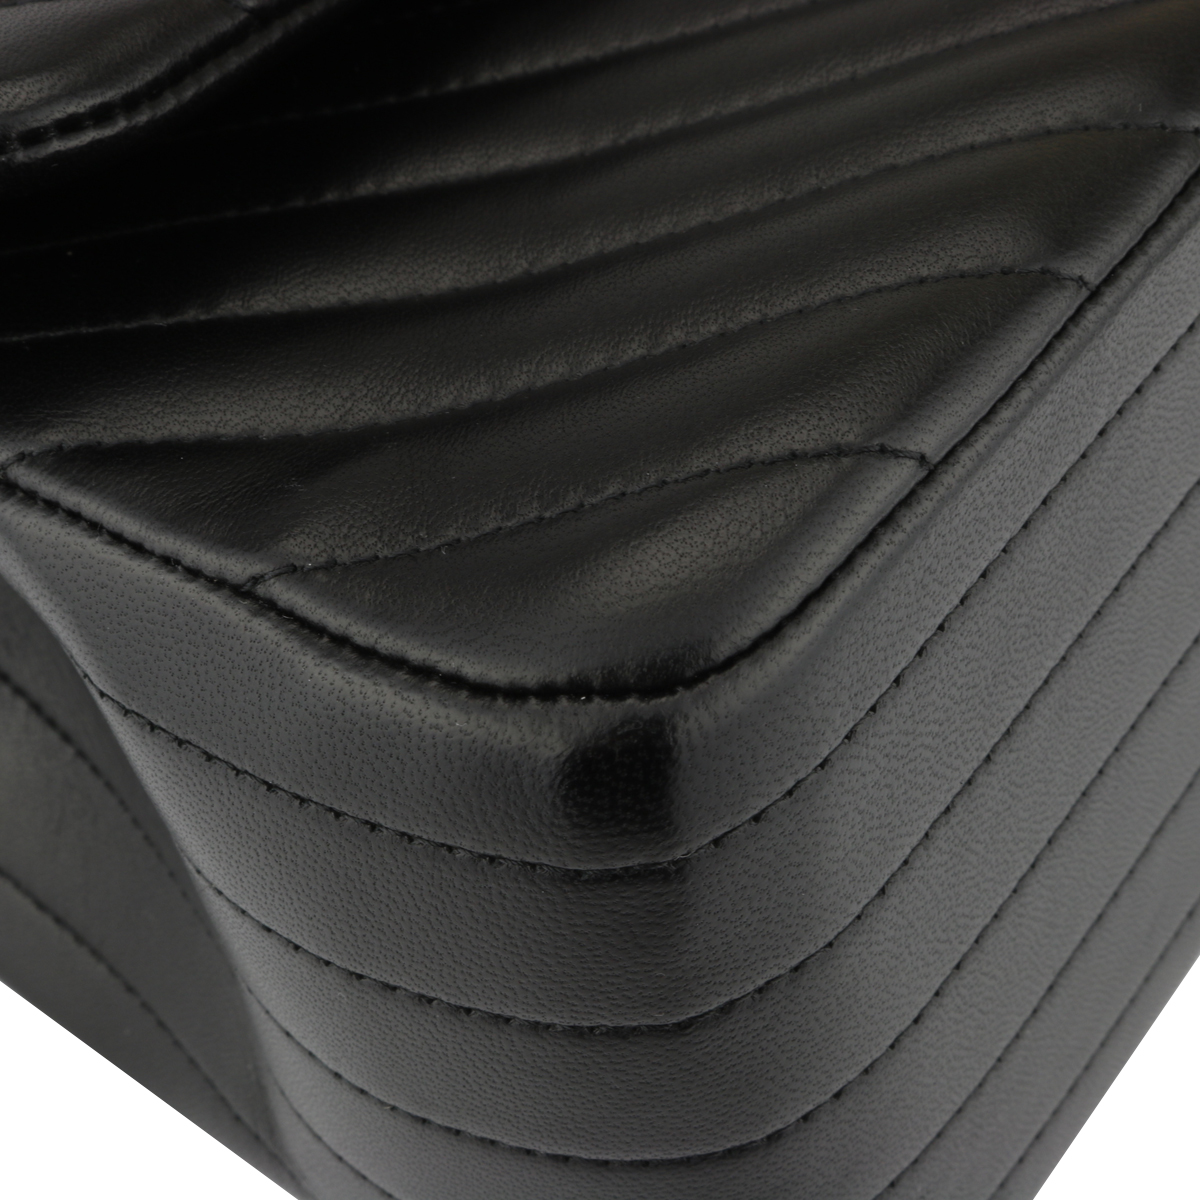 Chanel Flap Bag so black Classic I Best Chanel Bag I Mary´s Closet 